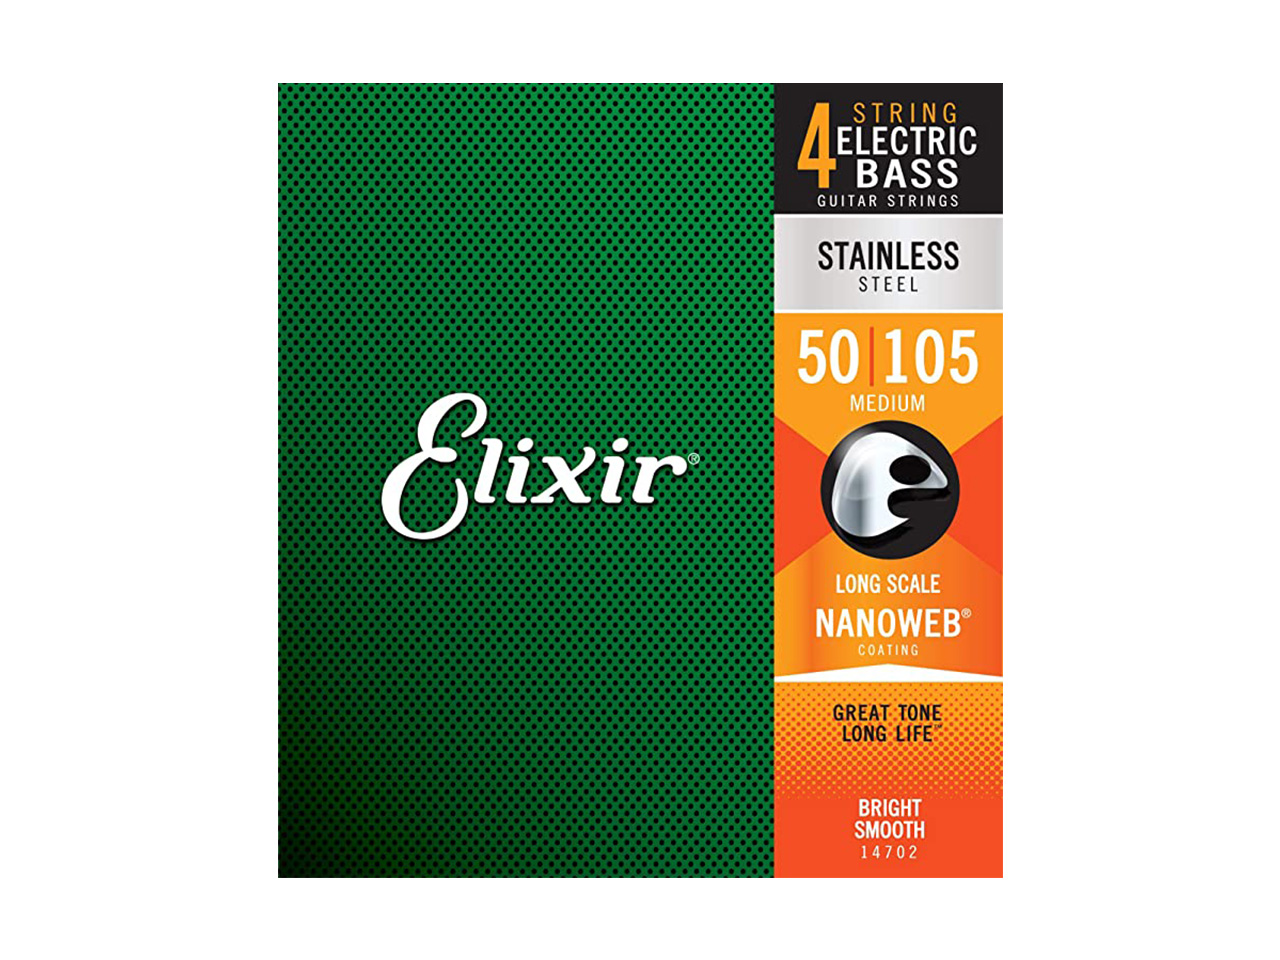 Elixir®(エリクサー) BASS NANOWEB(ステンレス) Medium #14702 / 050-105 (エレキベース弦/Long Scale)